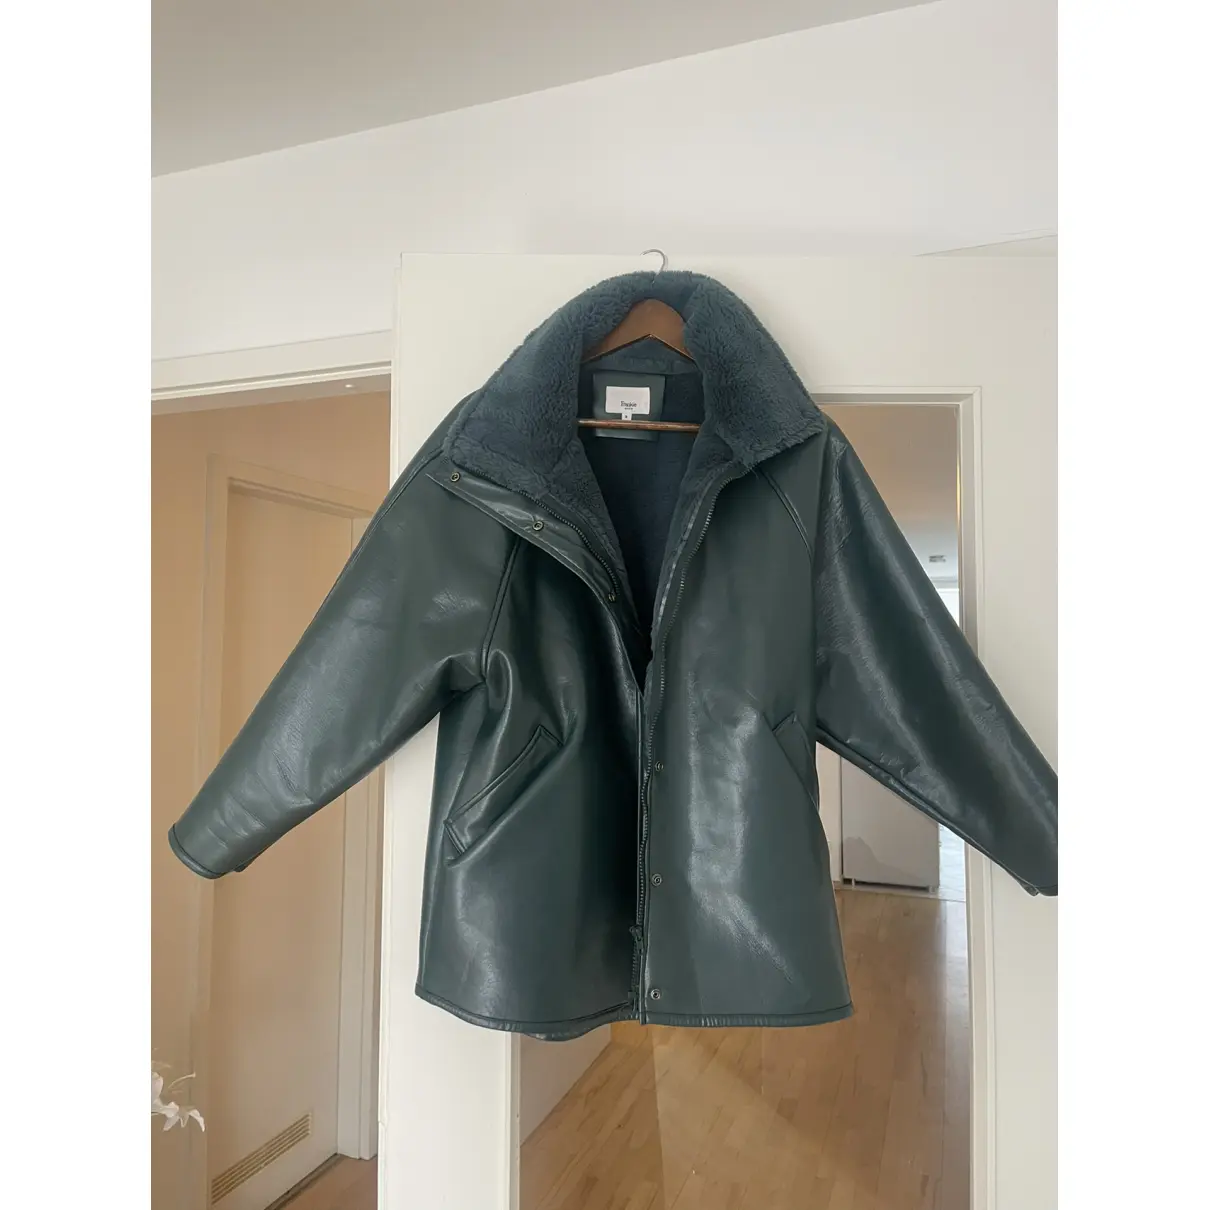 Buy The Frankie Shop Biker jacket online